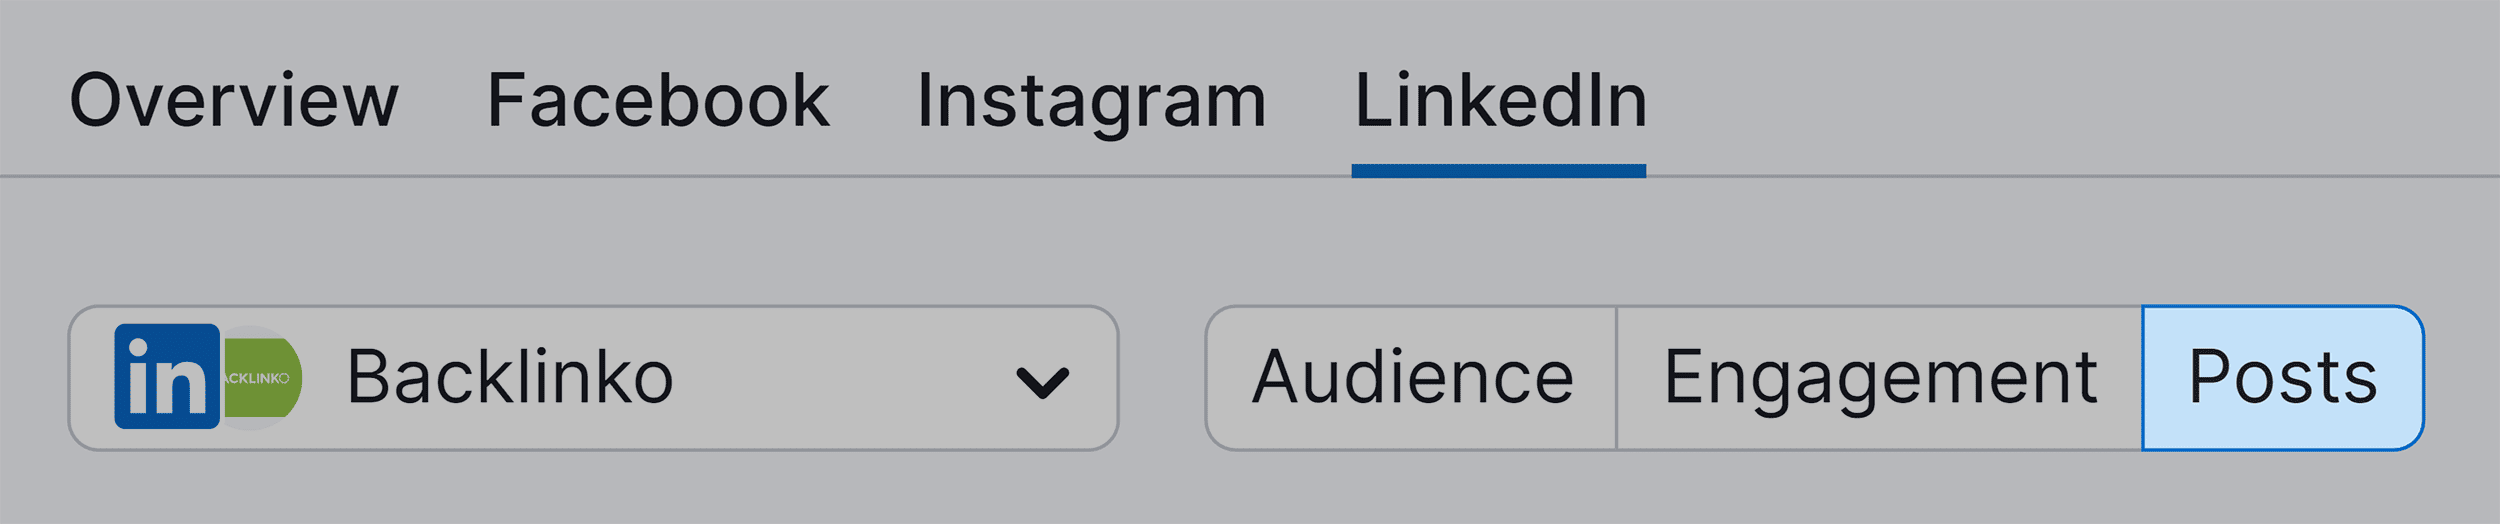 Social Analytics – LinkedIn – Posts